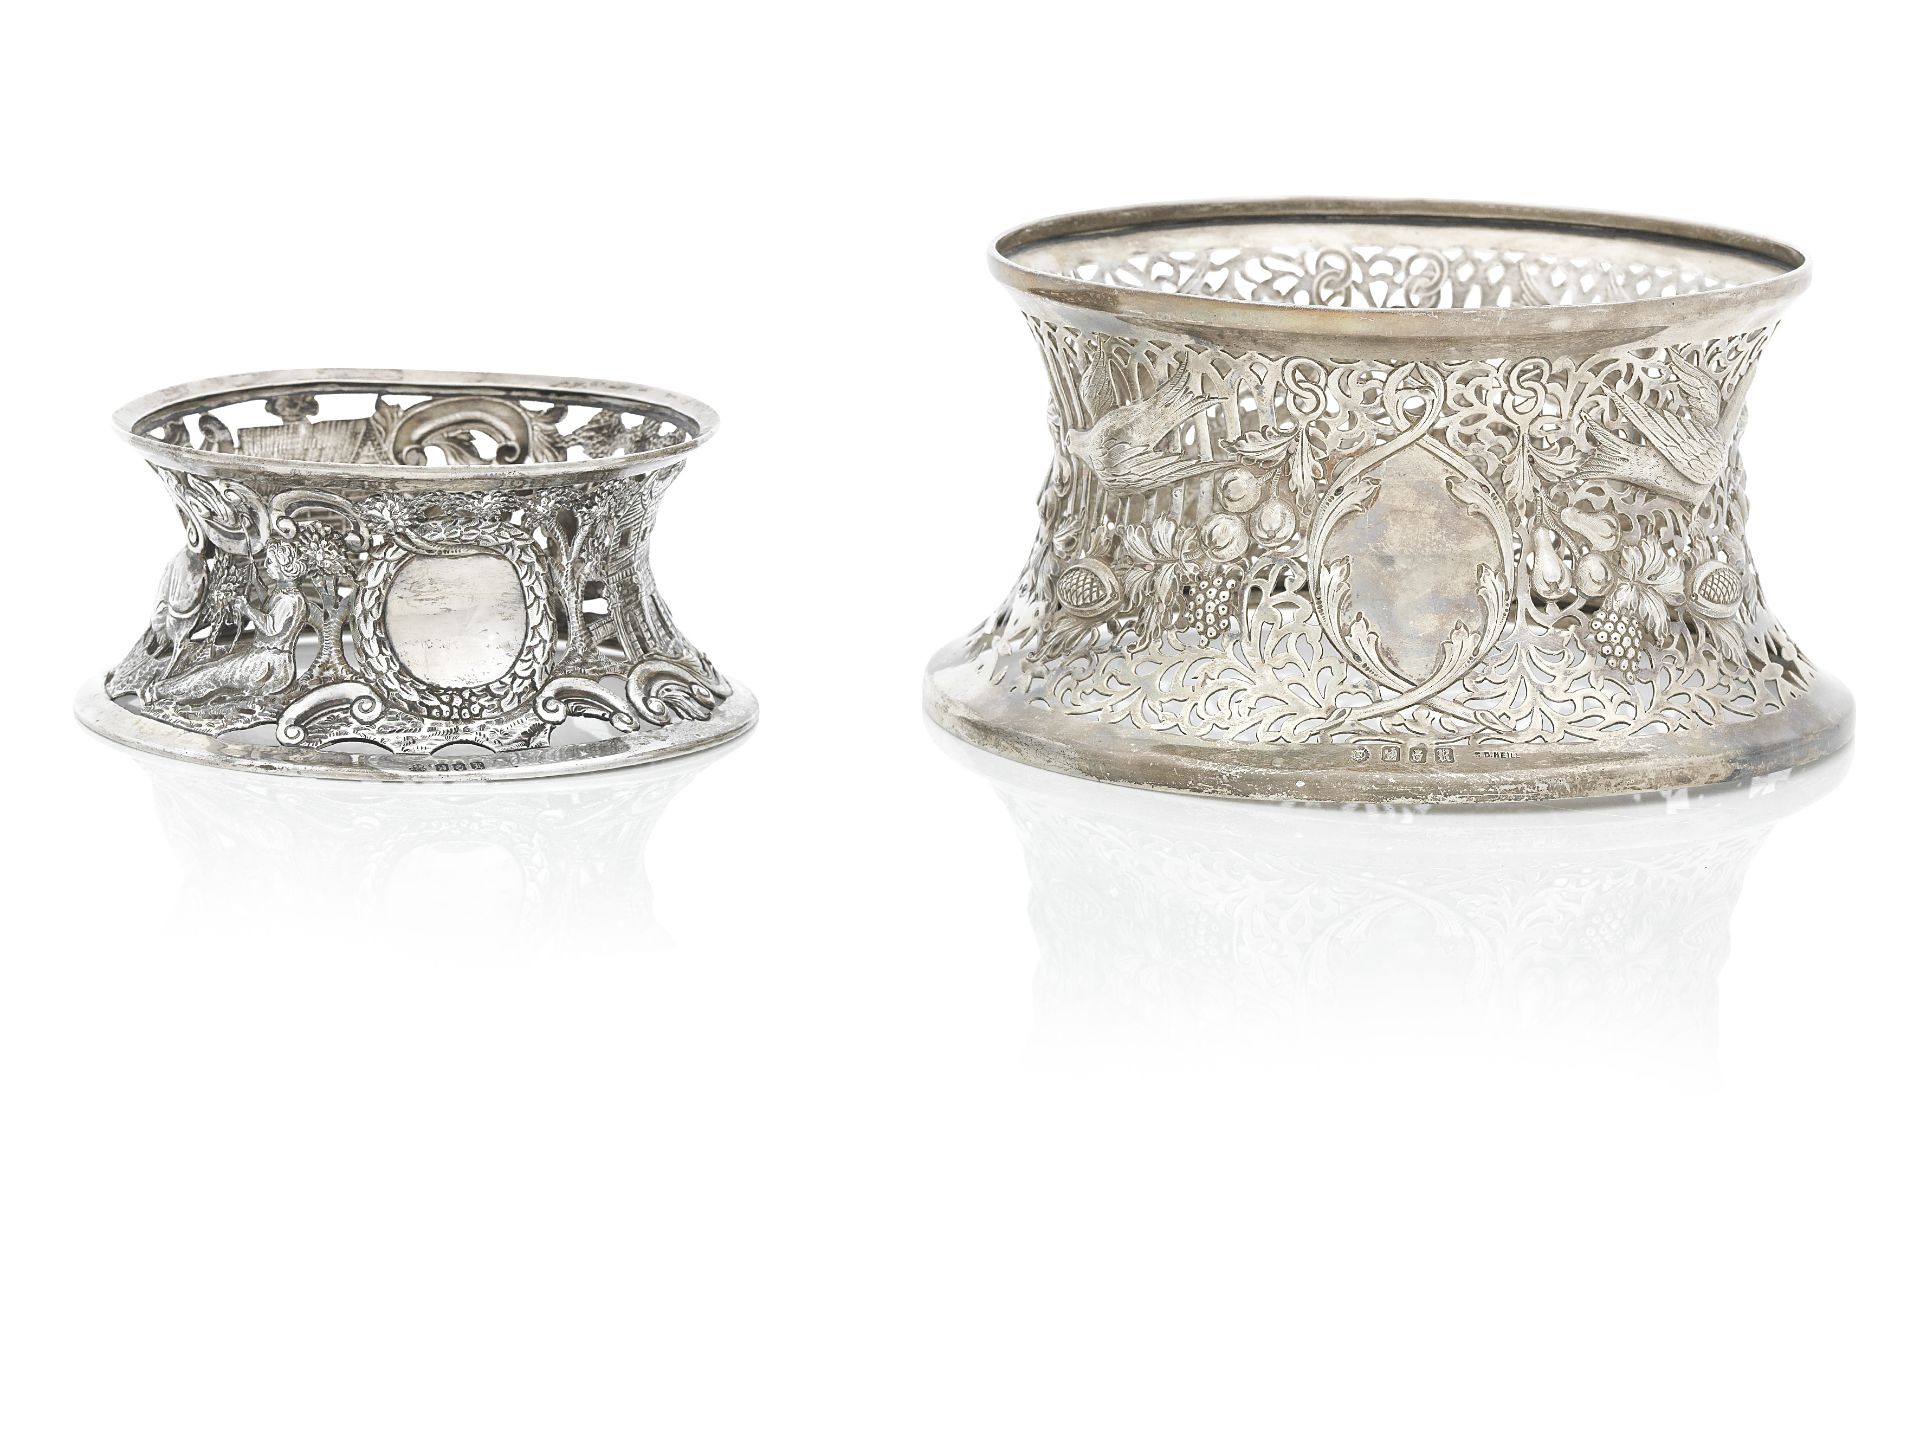 Two Irish Silver Dish Rings Early 20th century,